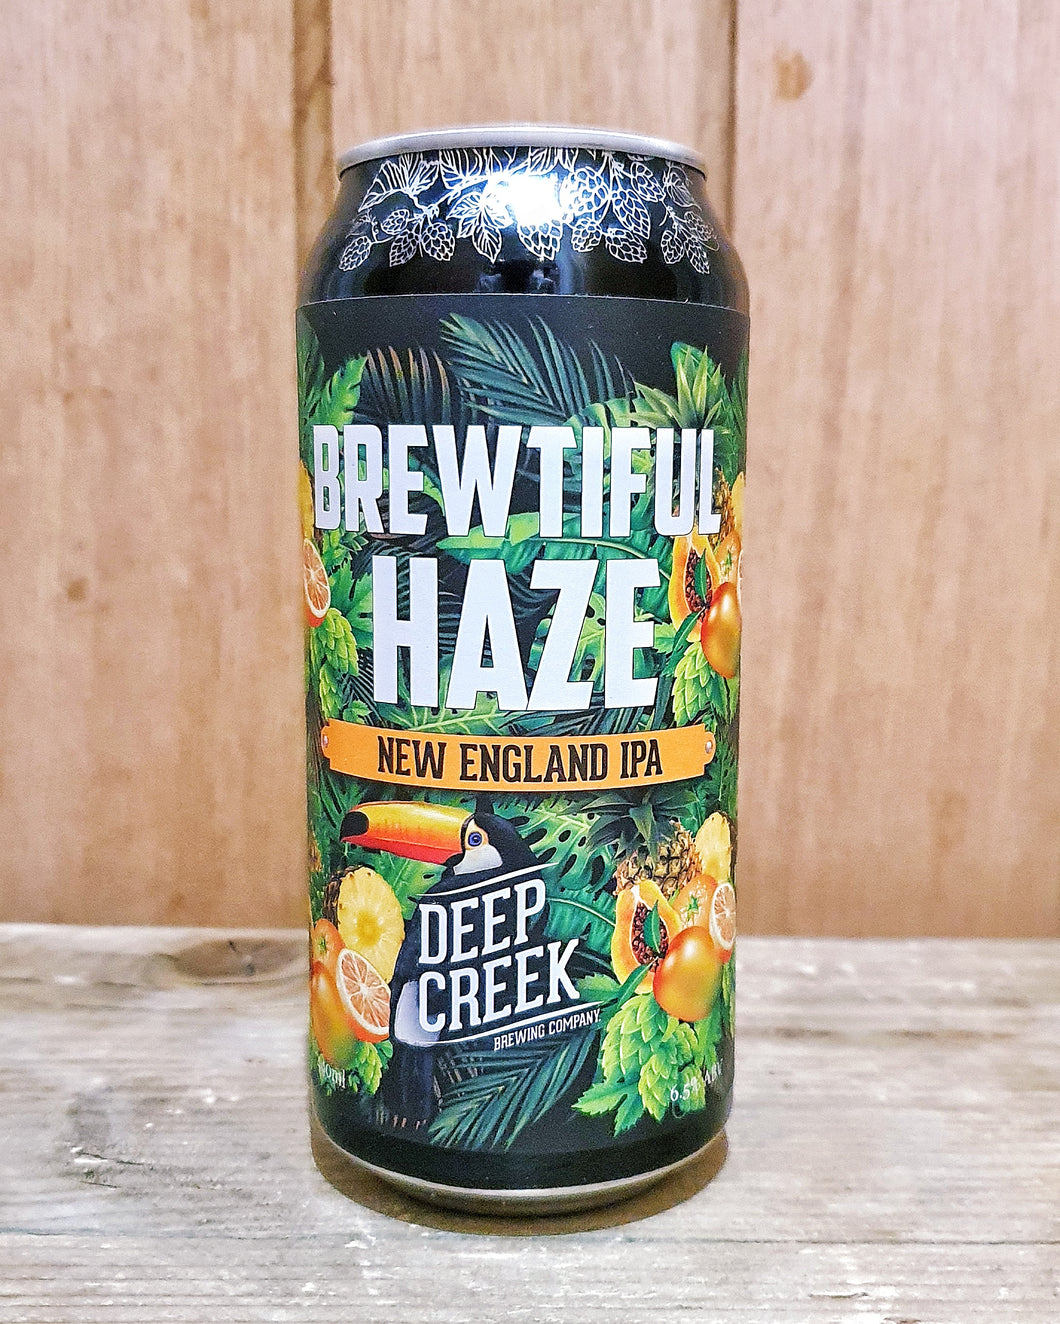 New Zealand Craft Beer Co - Deep Creek Brewtiful Haze